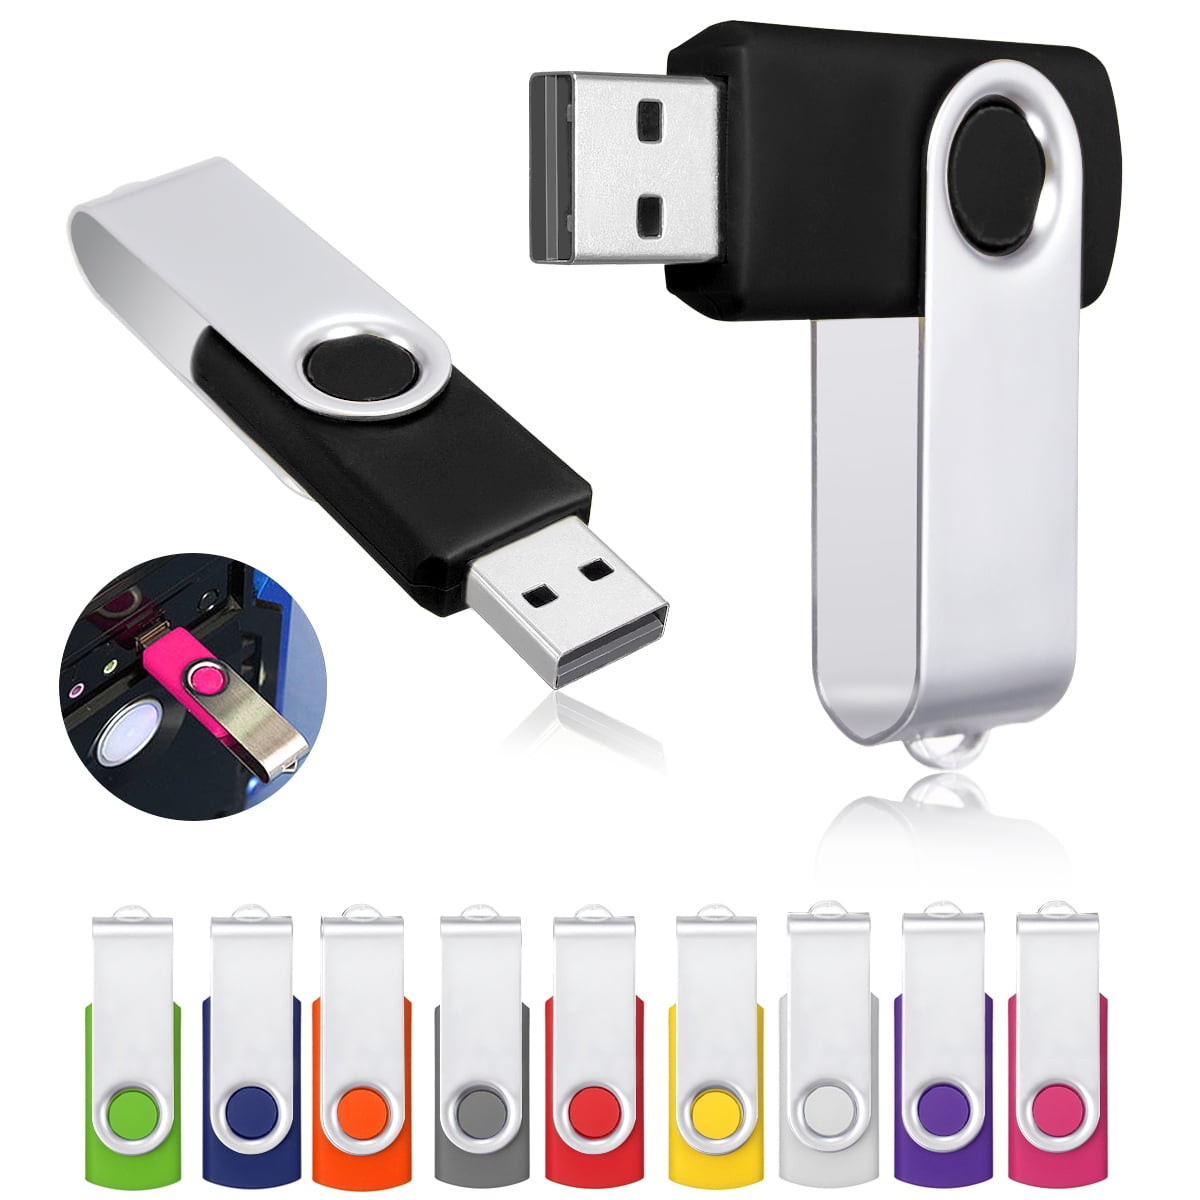 1GB-32GB 64MB-512MB USB 2.0 Flash Pen Drive Memory Stick Thumb Storage Hot Gifts 